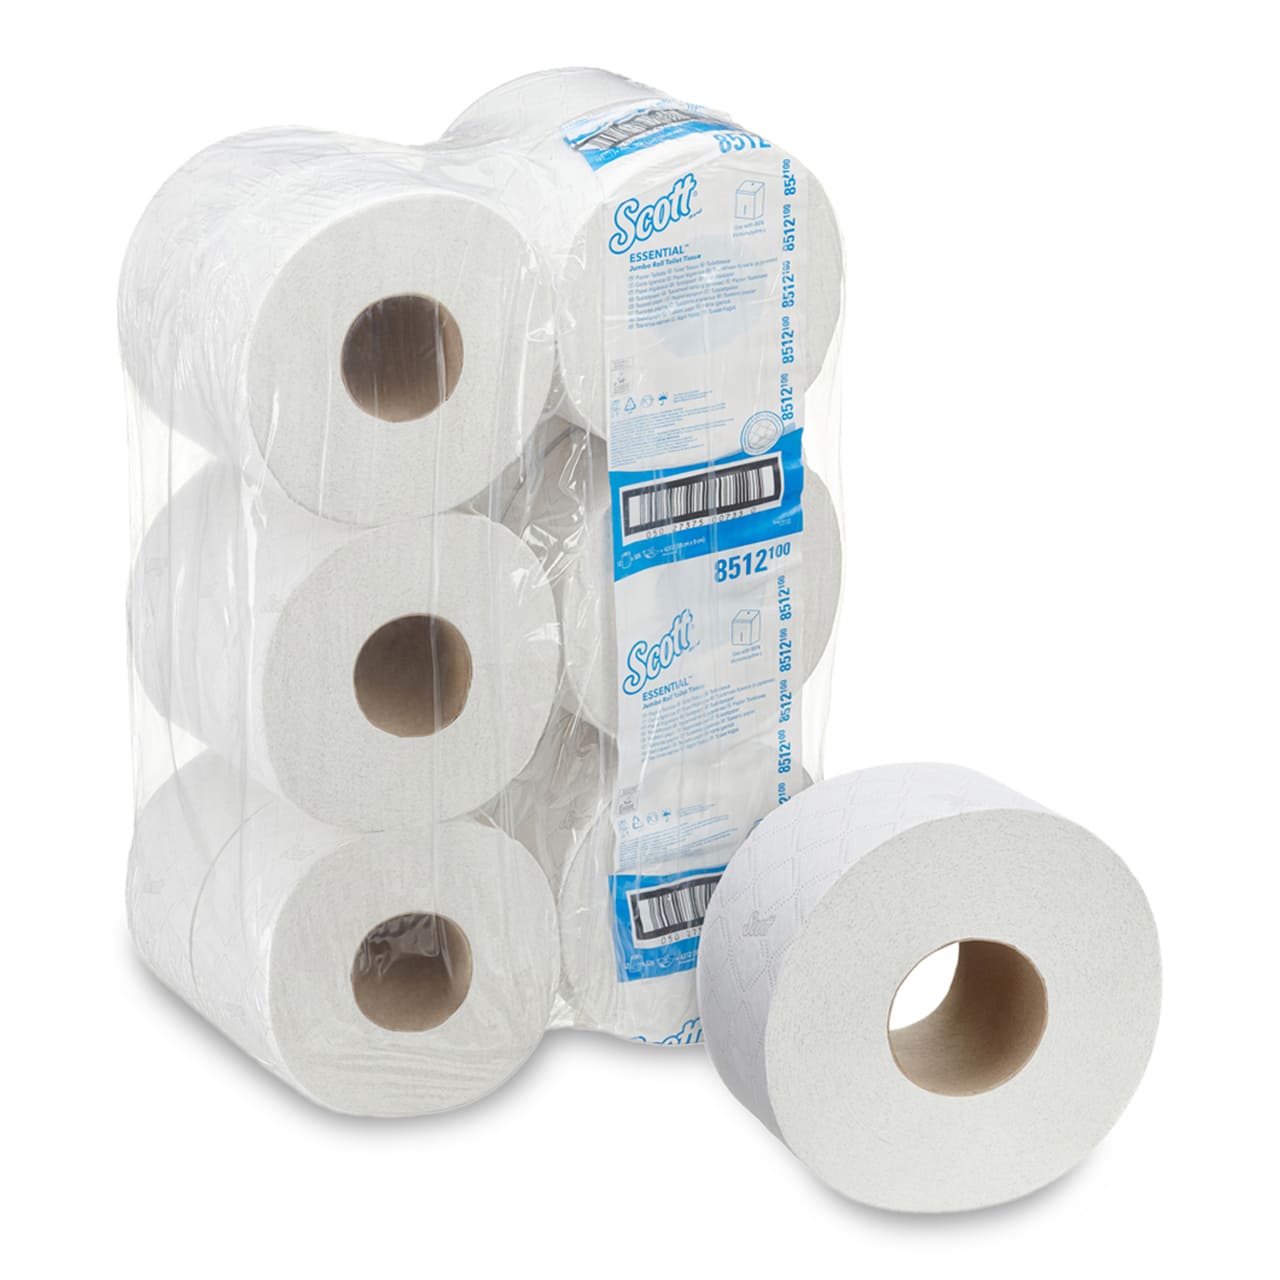 Scott® Essential™ WC-Papier - Jumbo Rolle